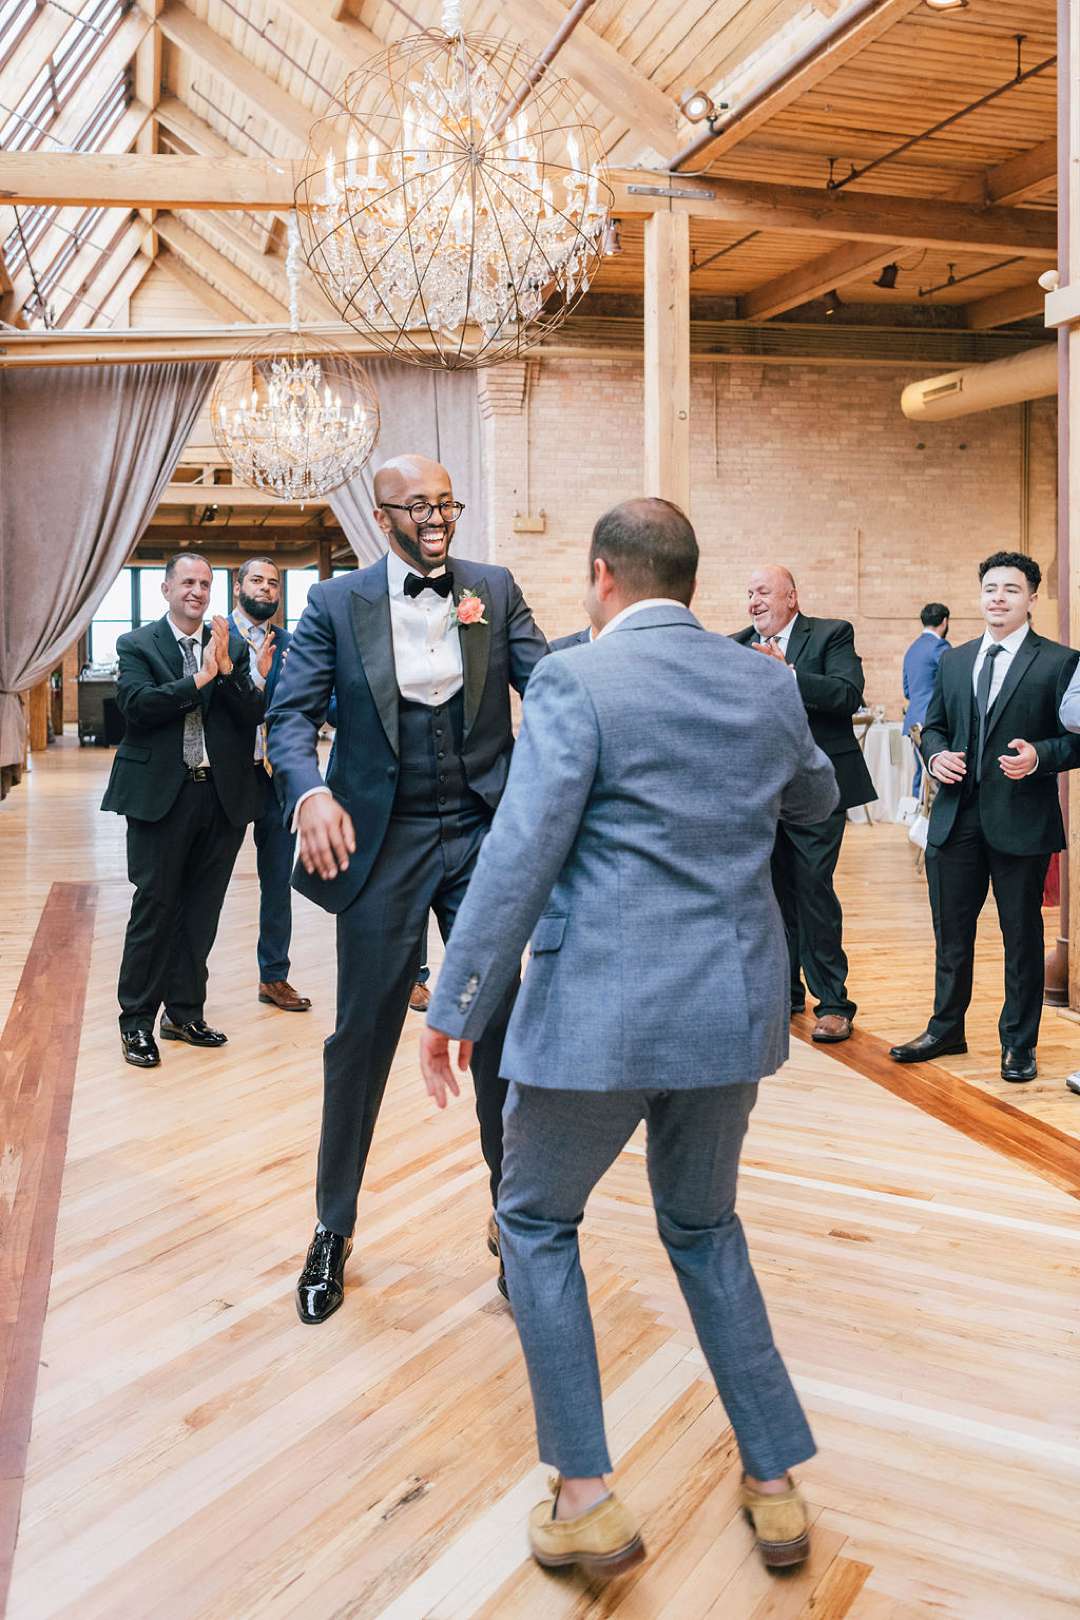 Somali Groom dancing at his wedding reception